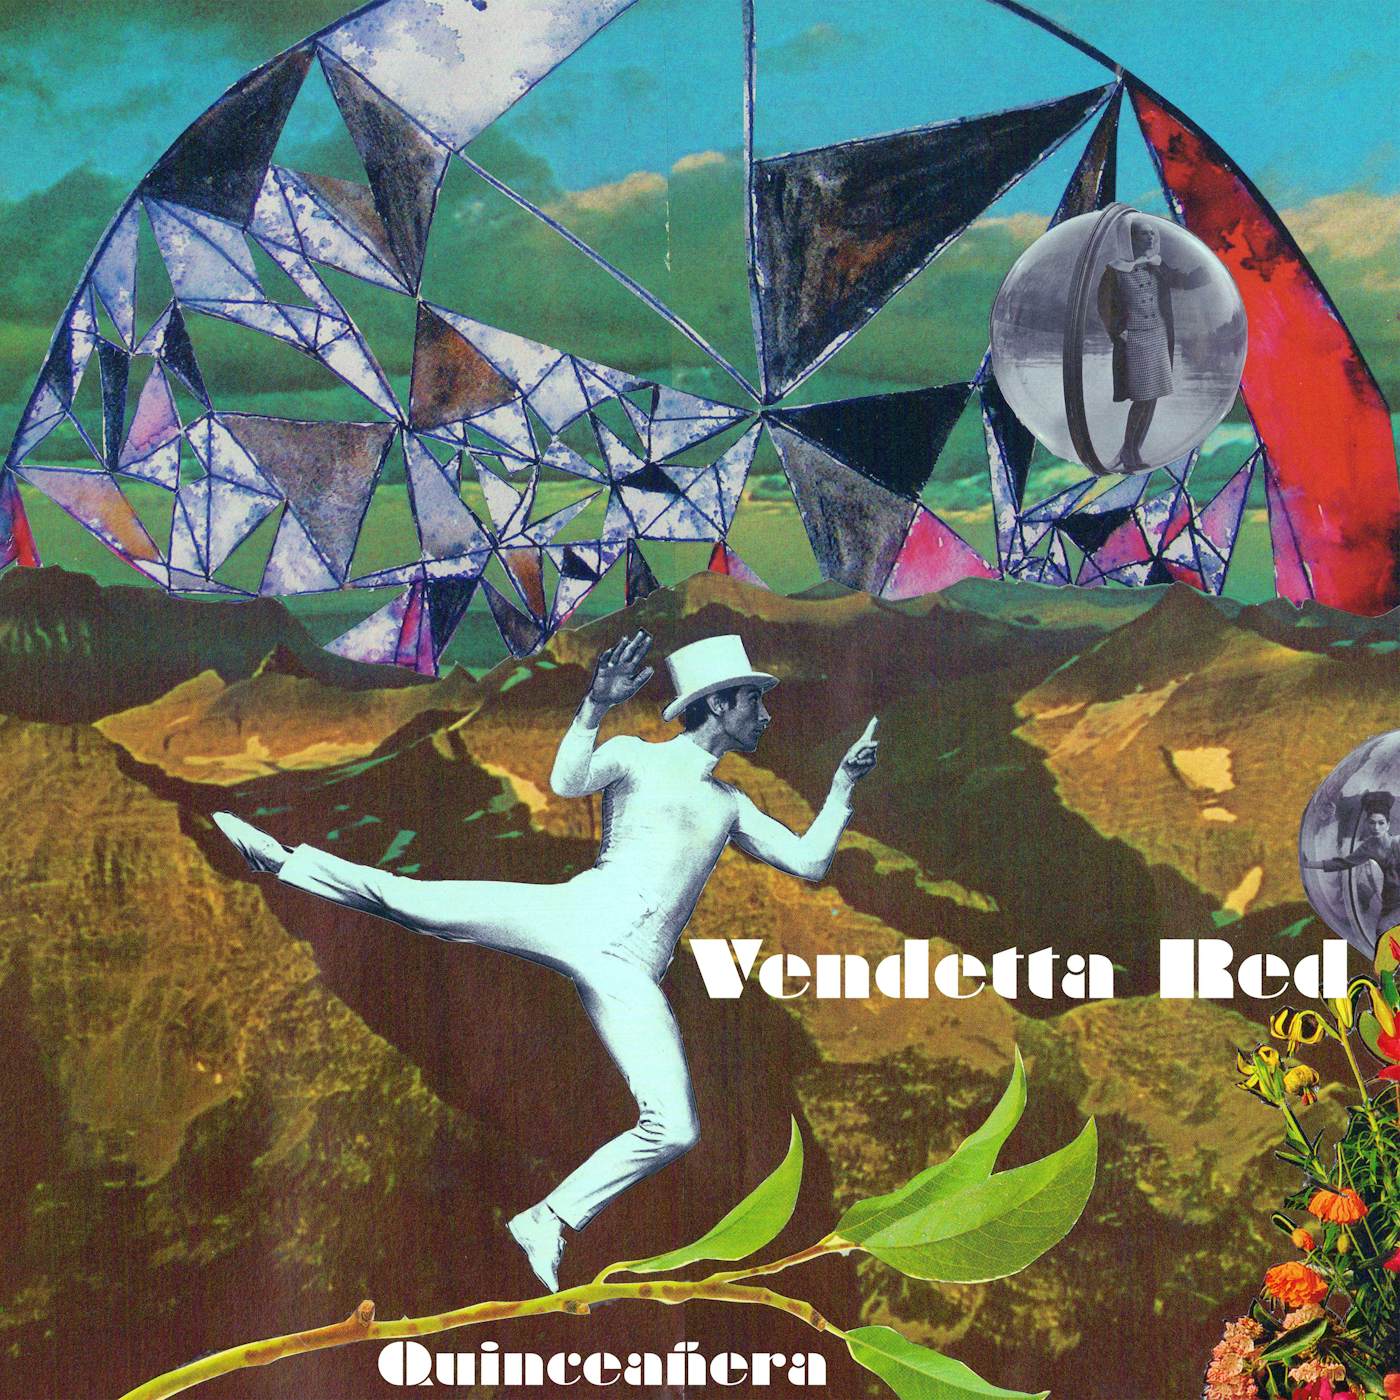 Vendetta Red QUINCEANERA CD